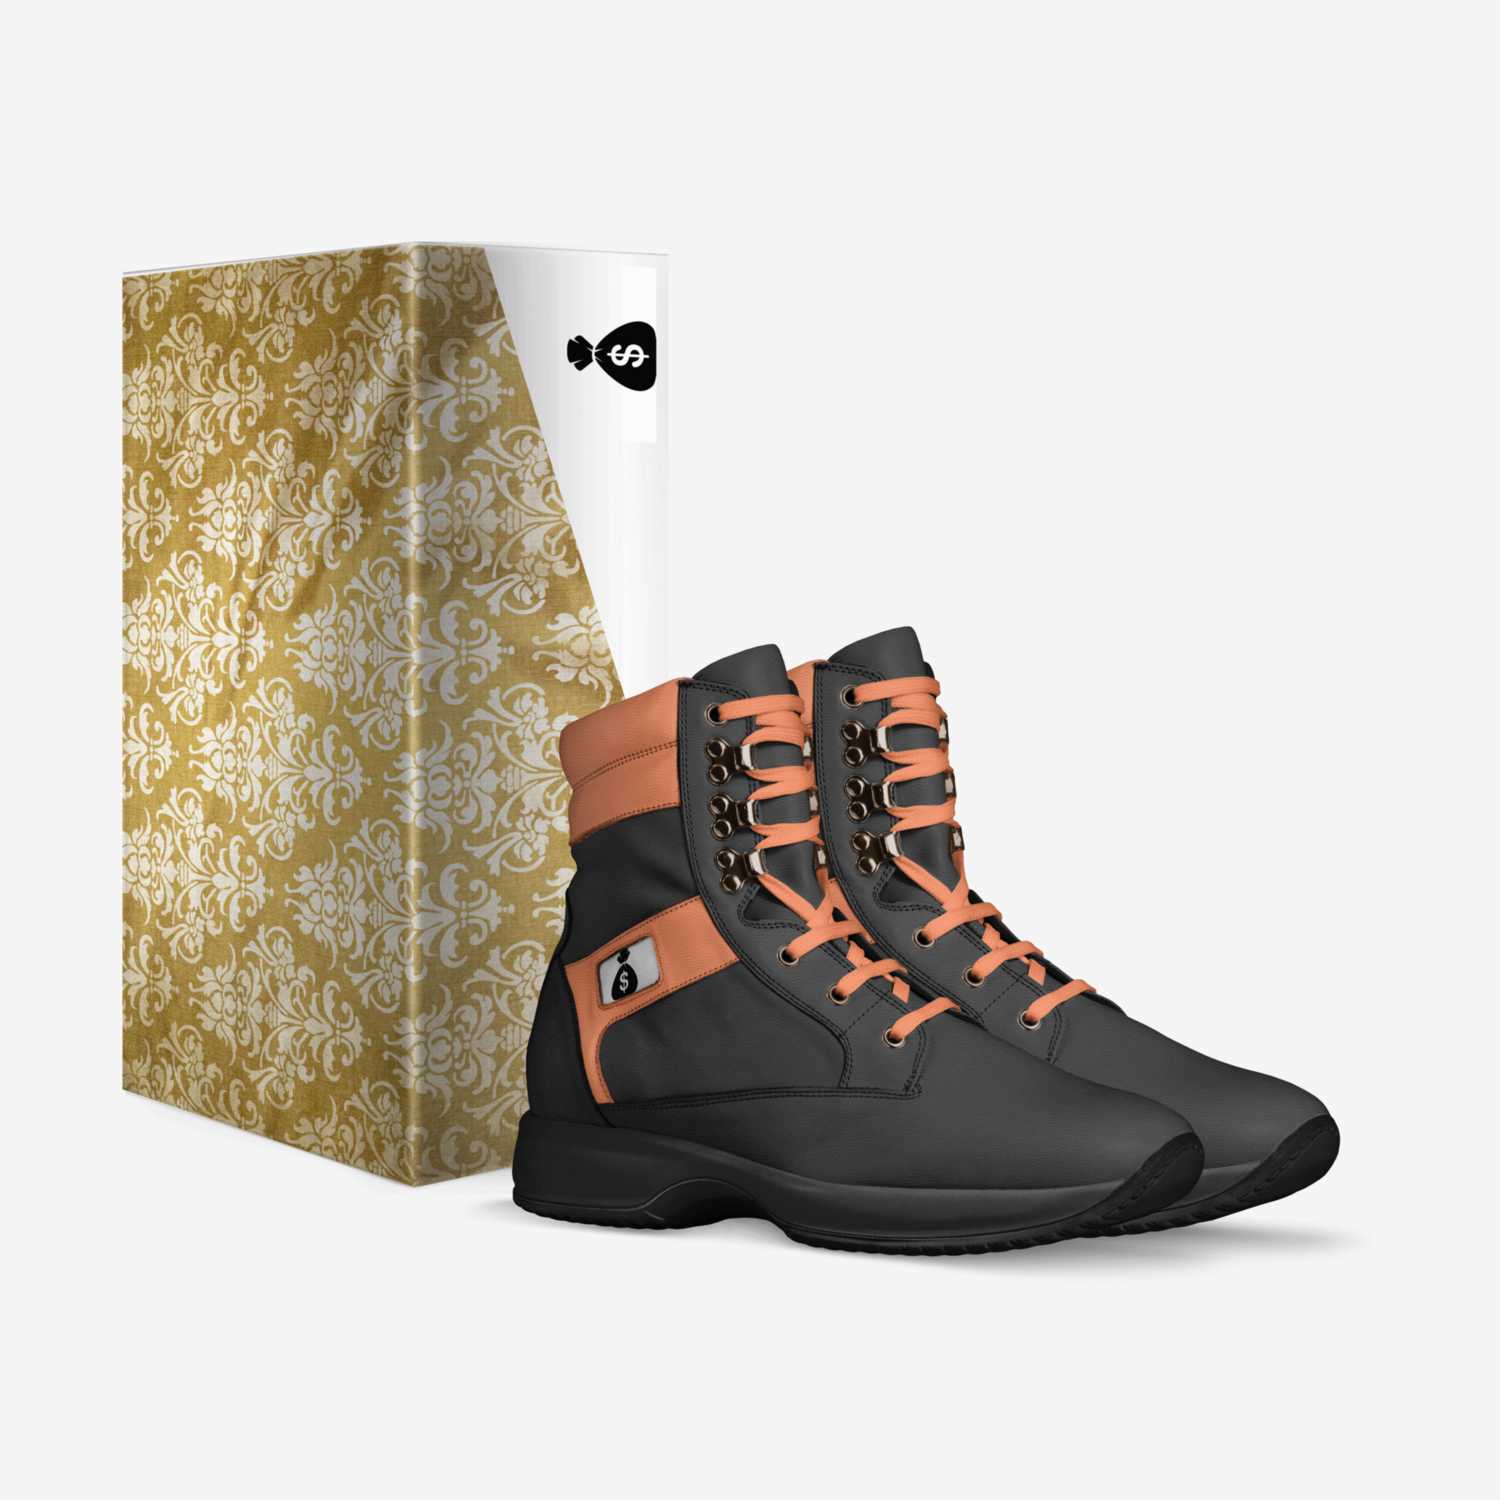 FirstClassCartels custom made in Italy shoes by Montraz Edmonds | Box view